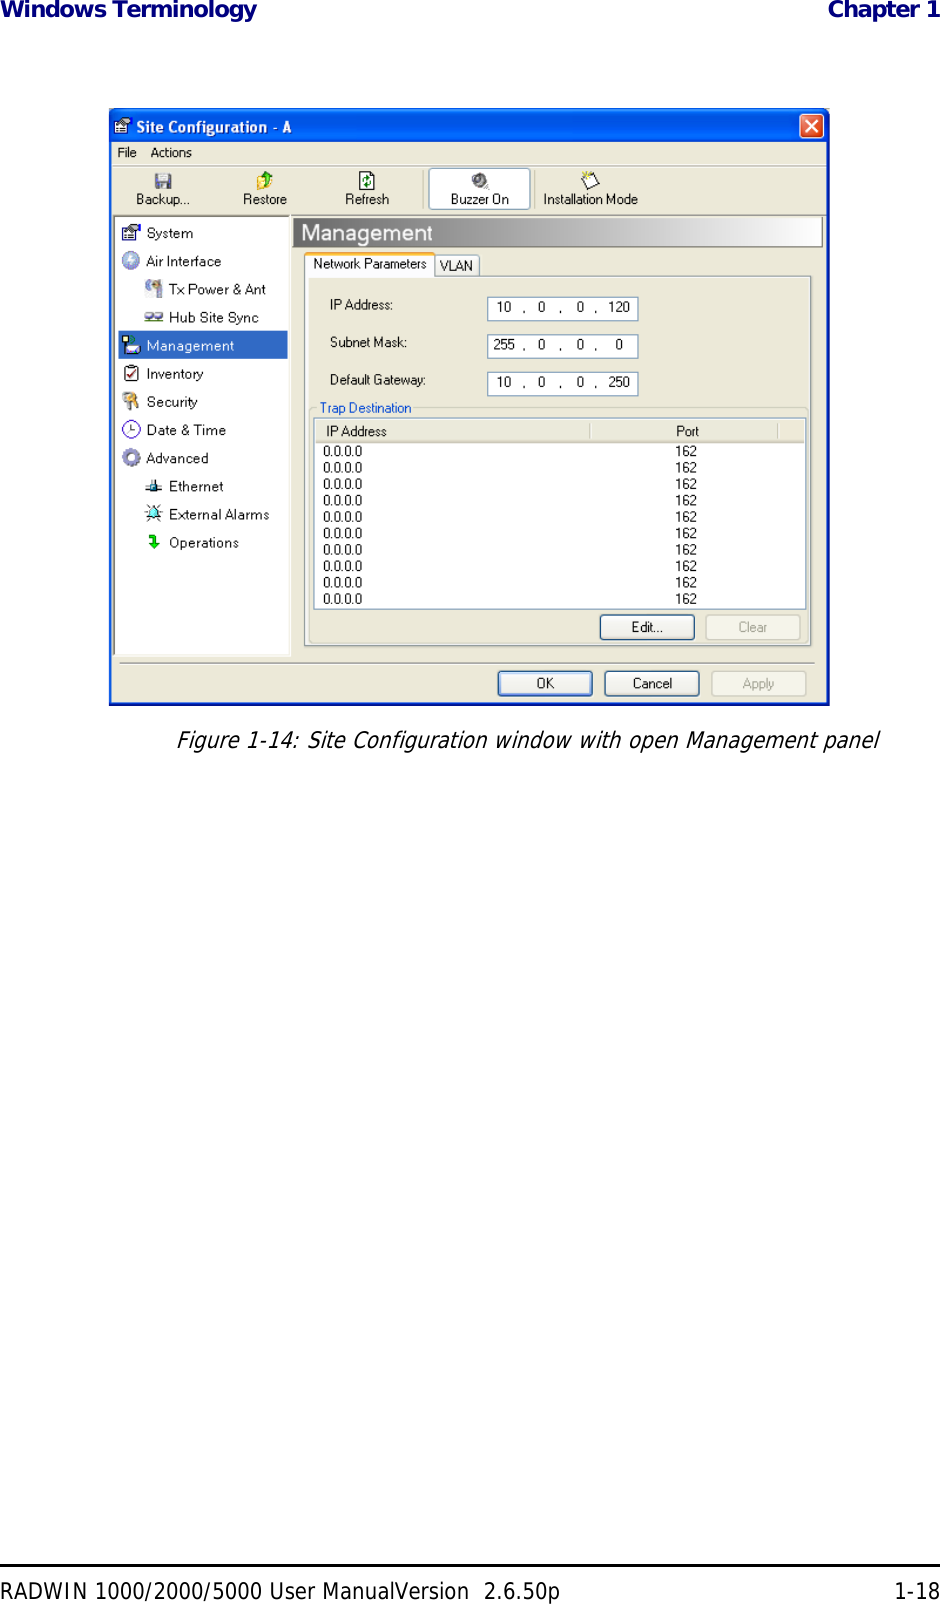 Windows Terminology  Chapter 1RADWIN 1000/2000/5000 User ManualVersion  2.6.50p 1-18Figure 1-14: Site Configuration window with open Management panel